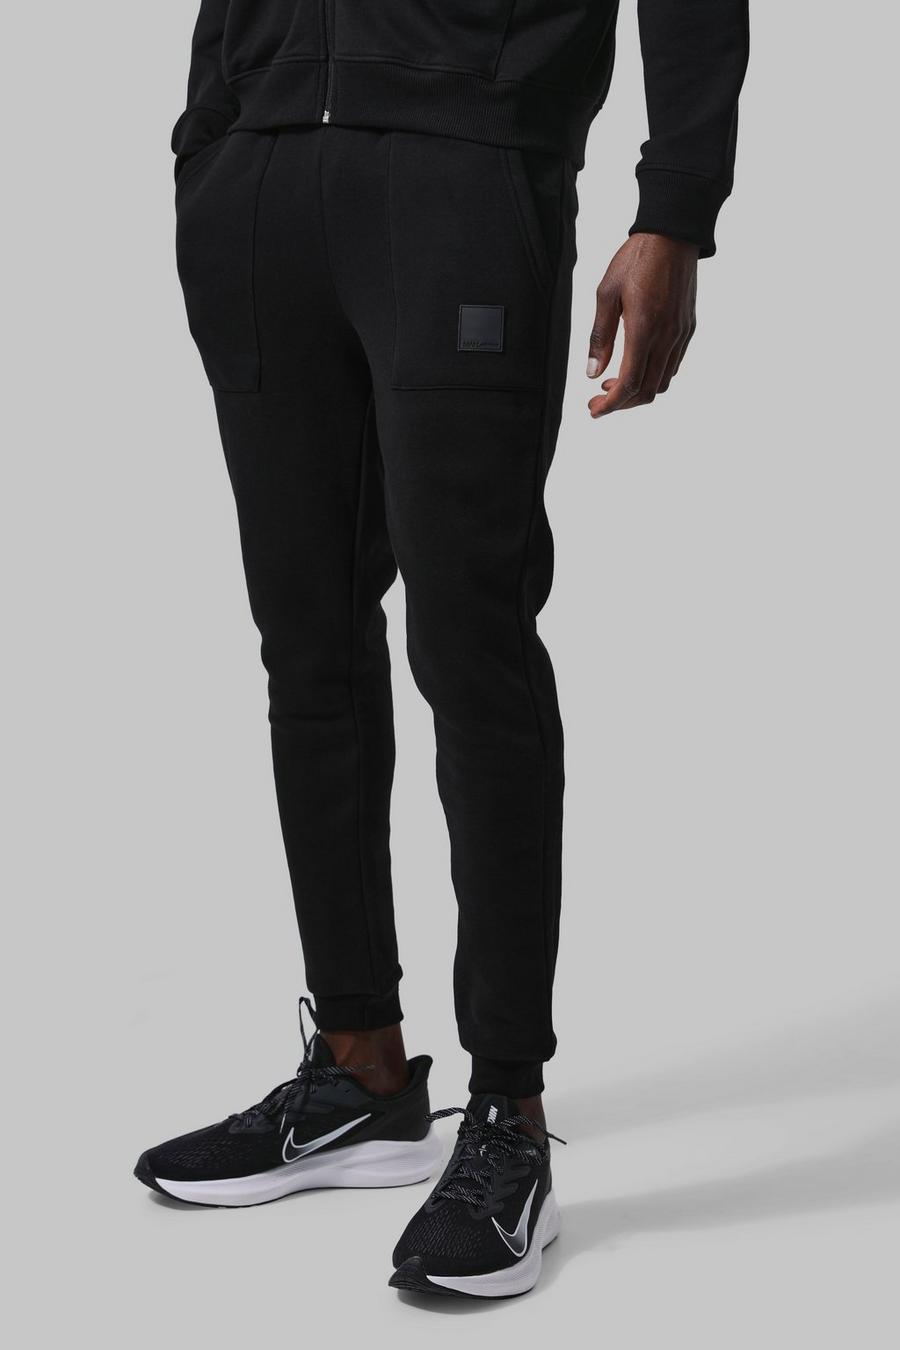 Pantaloni tuta Man Active Gym con tasche, Black nero image number 1